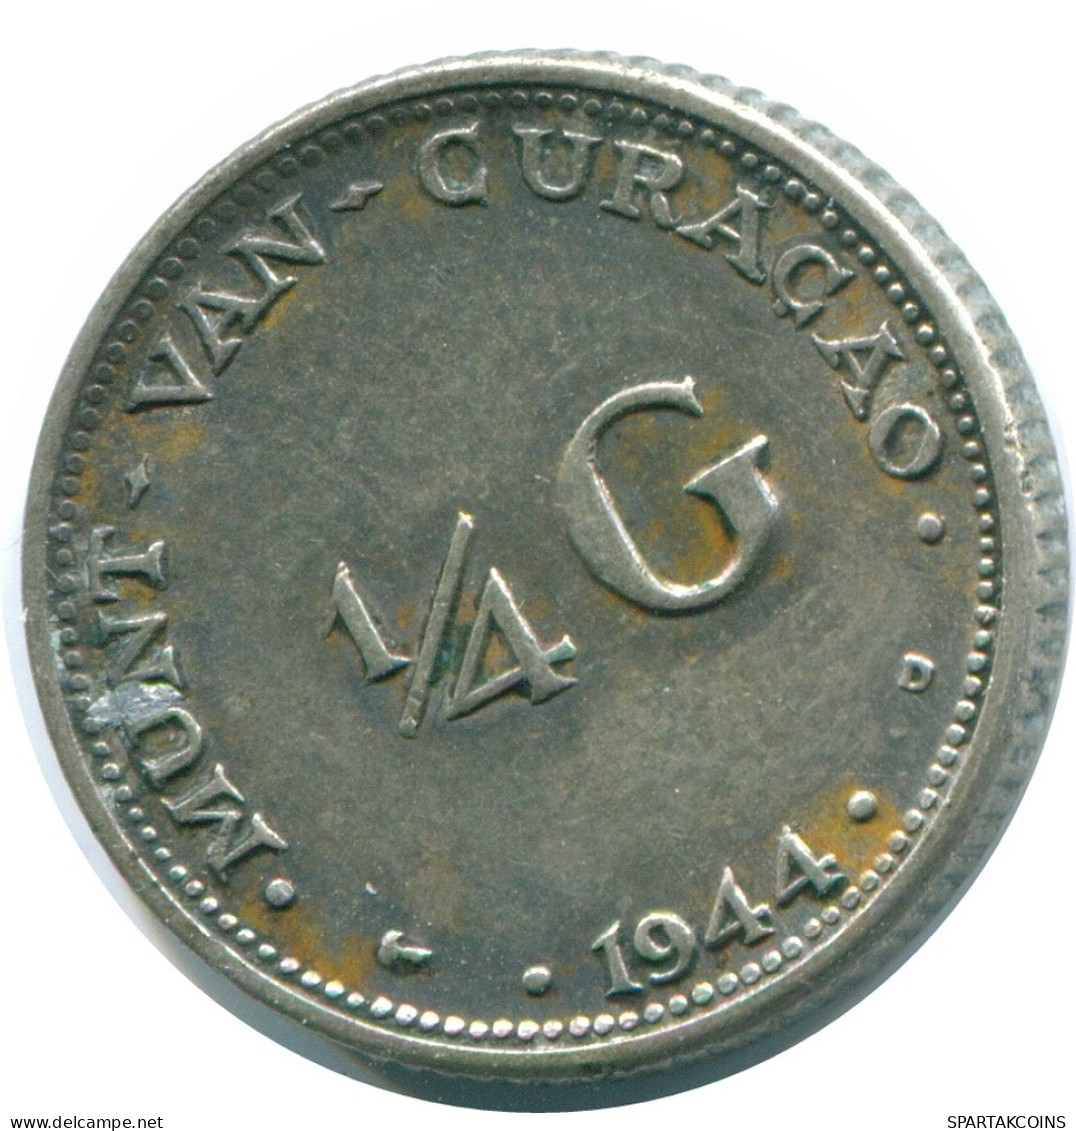 1/4 GULDEN 1944 CURACAO Netherlands SILVER Colonial Coin #NL10628.4.U - Curacao